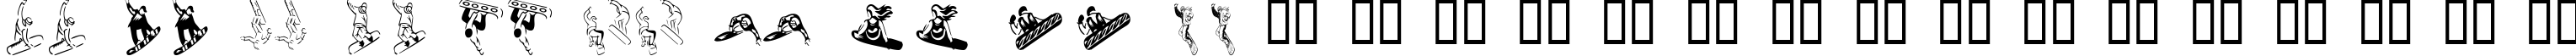 Пример написания английского алфавита шрифтом KR Snowboard